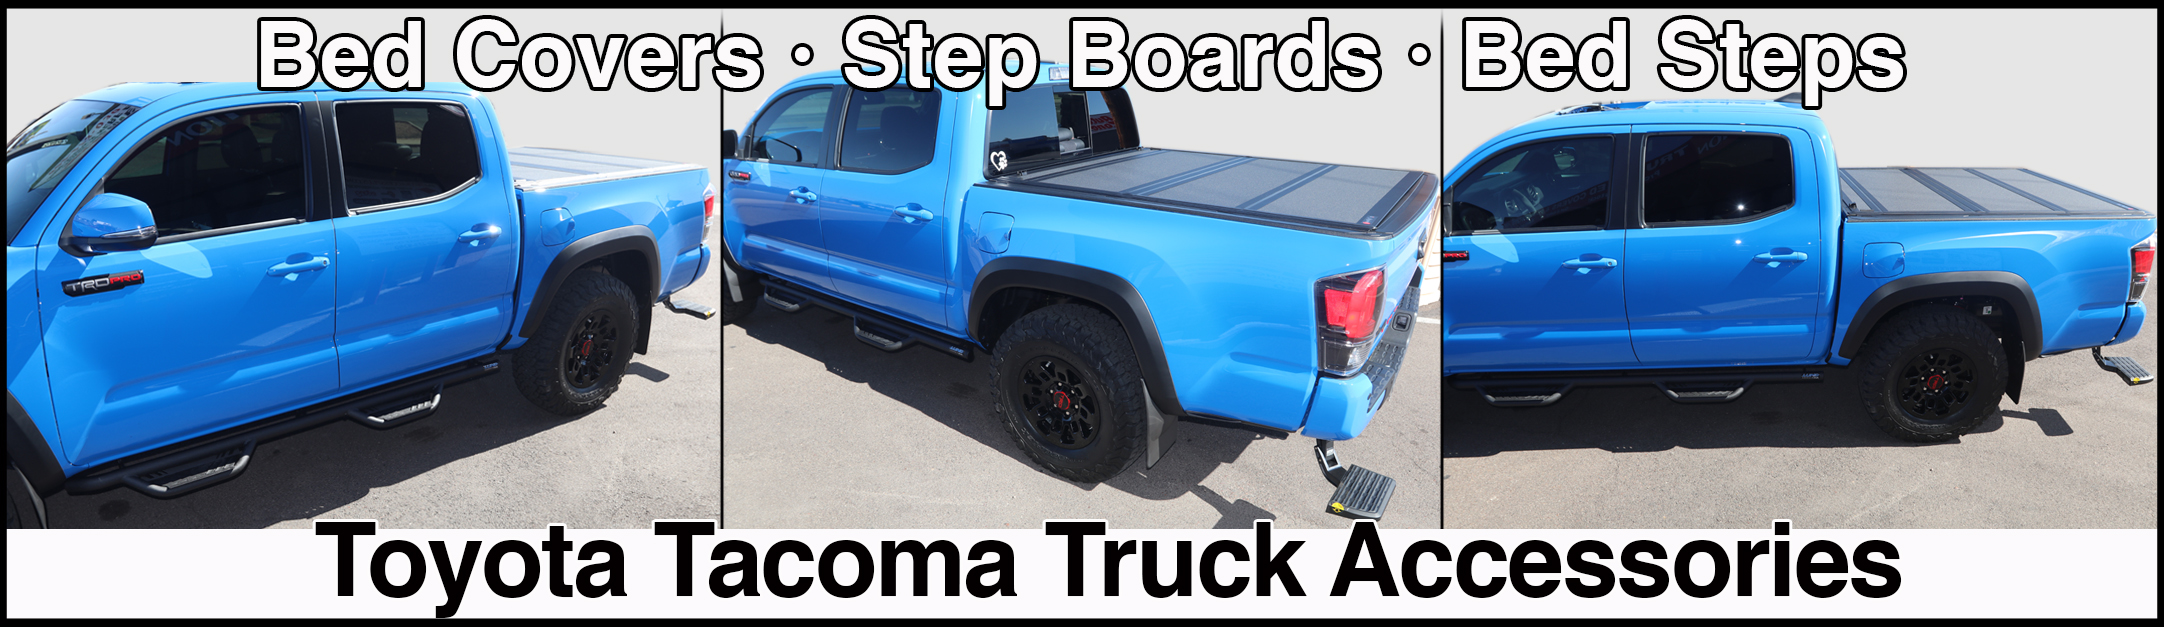 toyota tacoma truck accessories